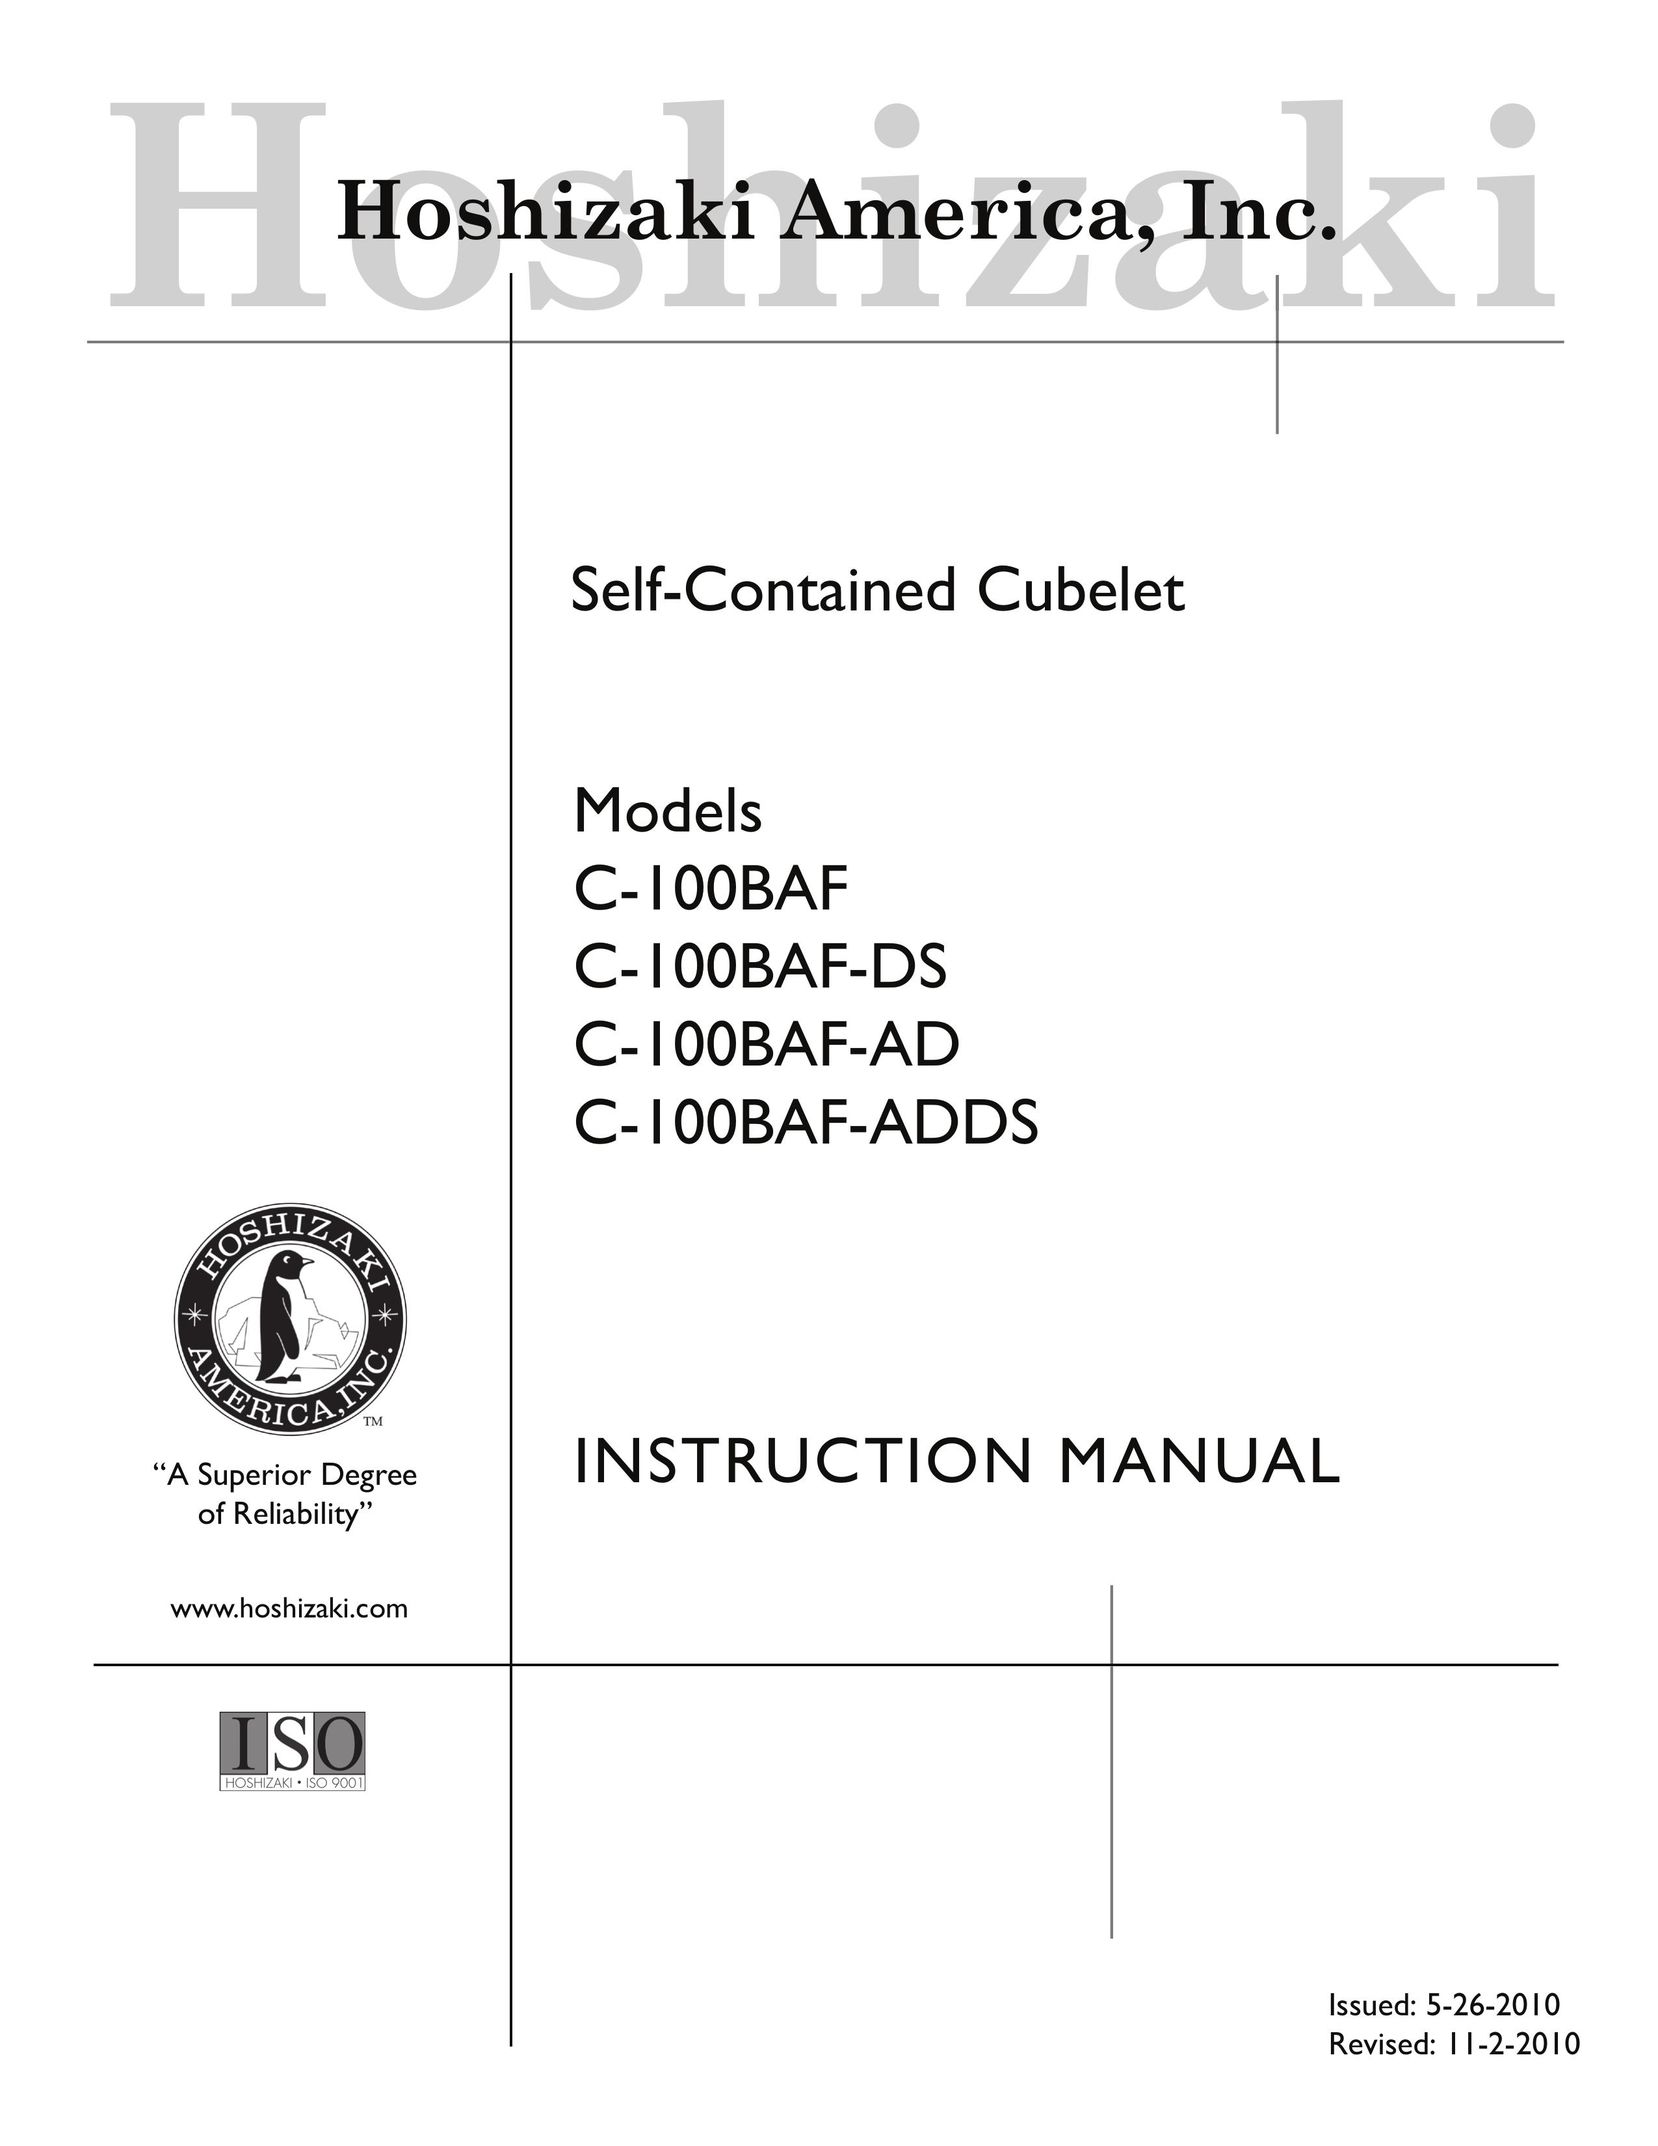 Hoshizaki C-100BAF-AD Ice Maker User Manual